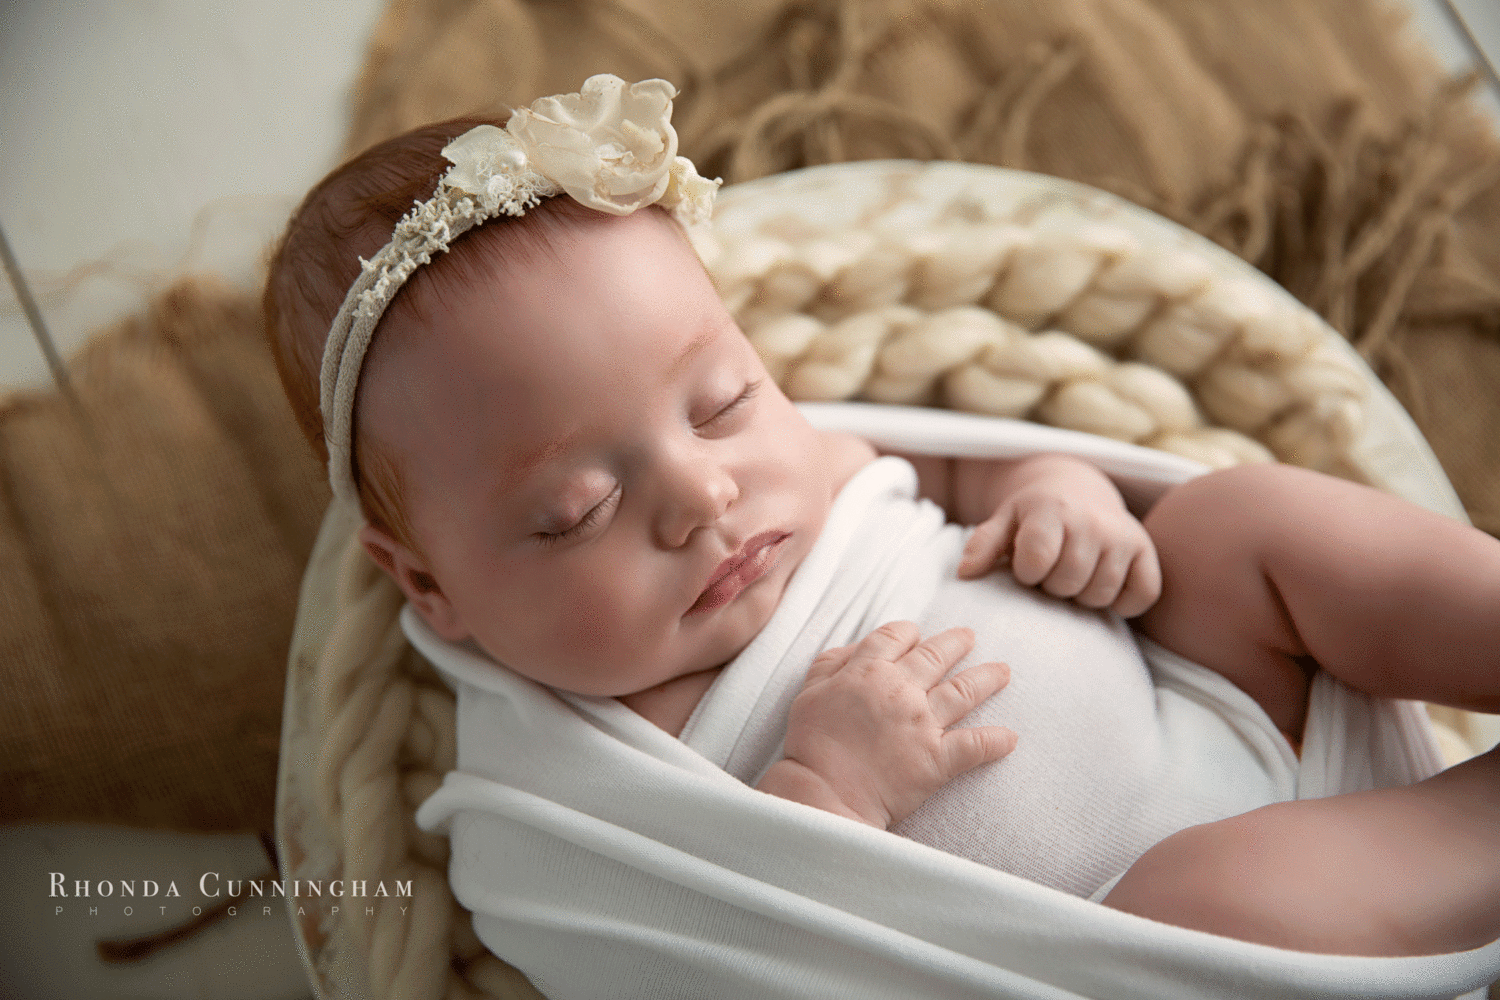 newborn photos of nicu baby with spina bifida